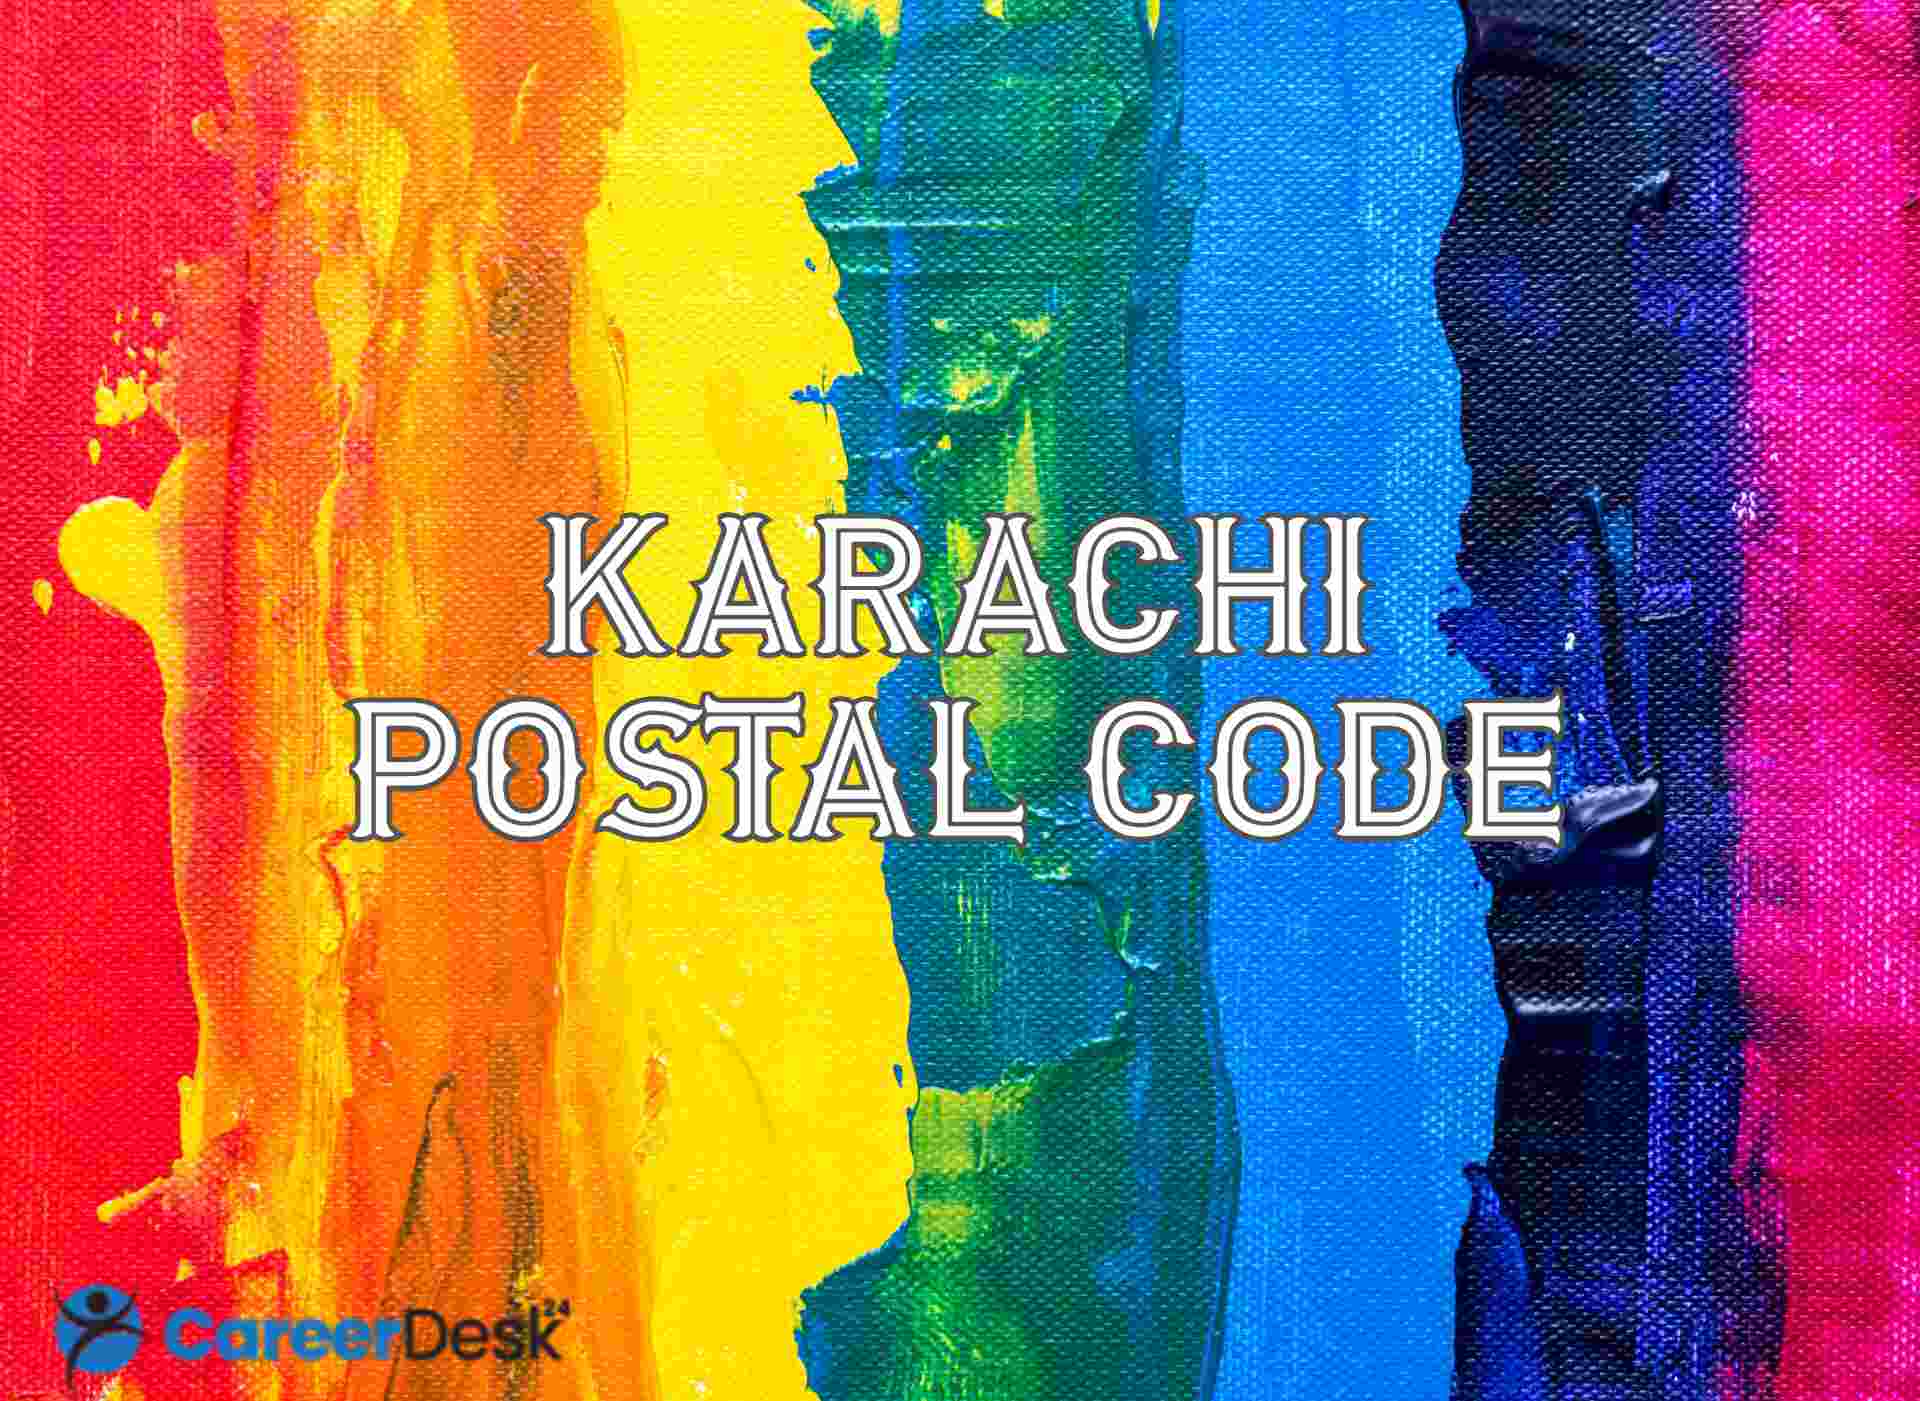 How to Find a Karachi Postal Code?